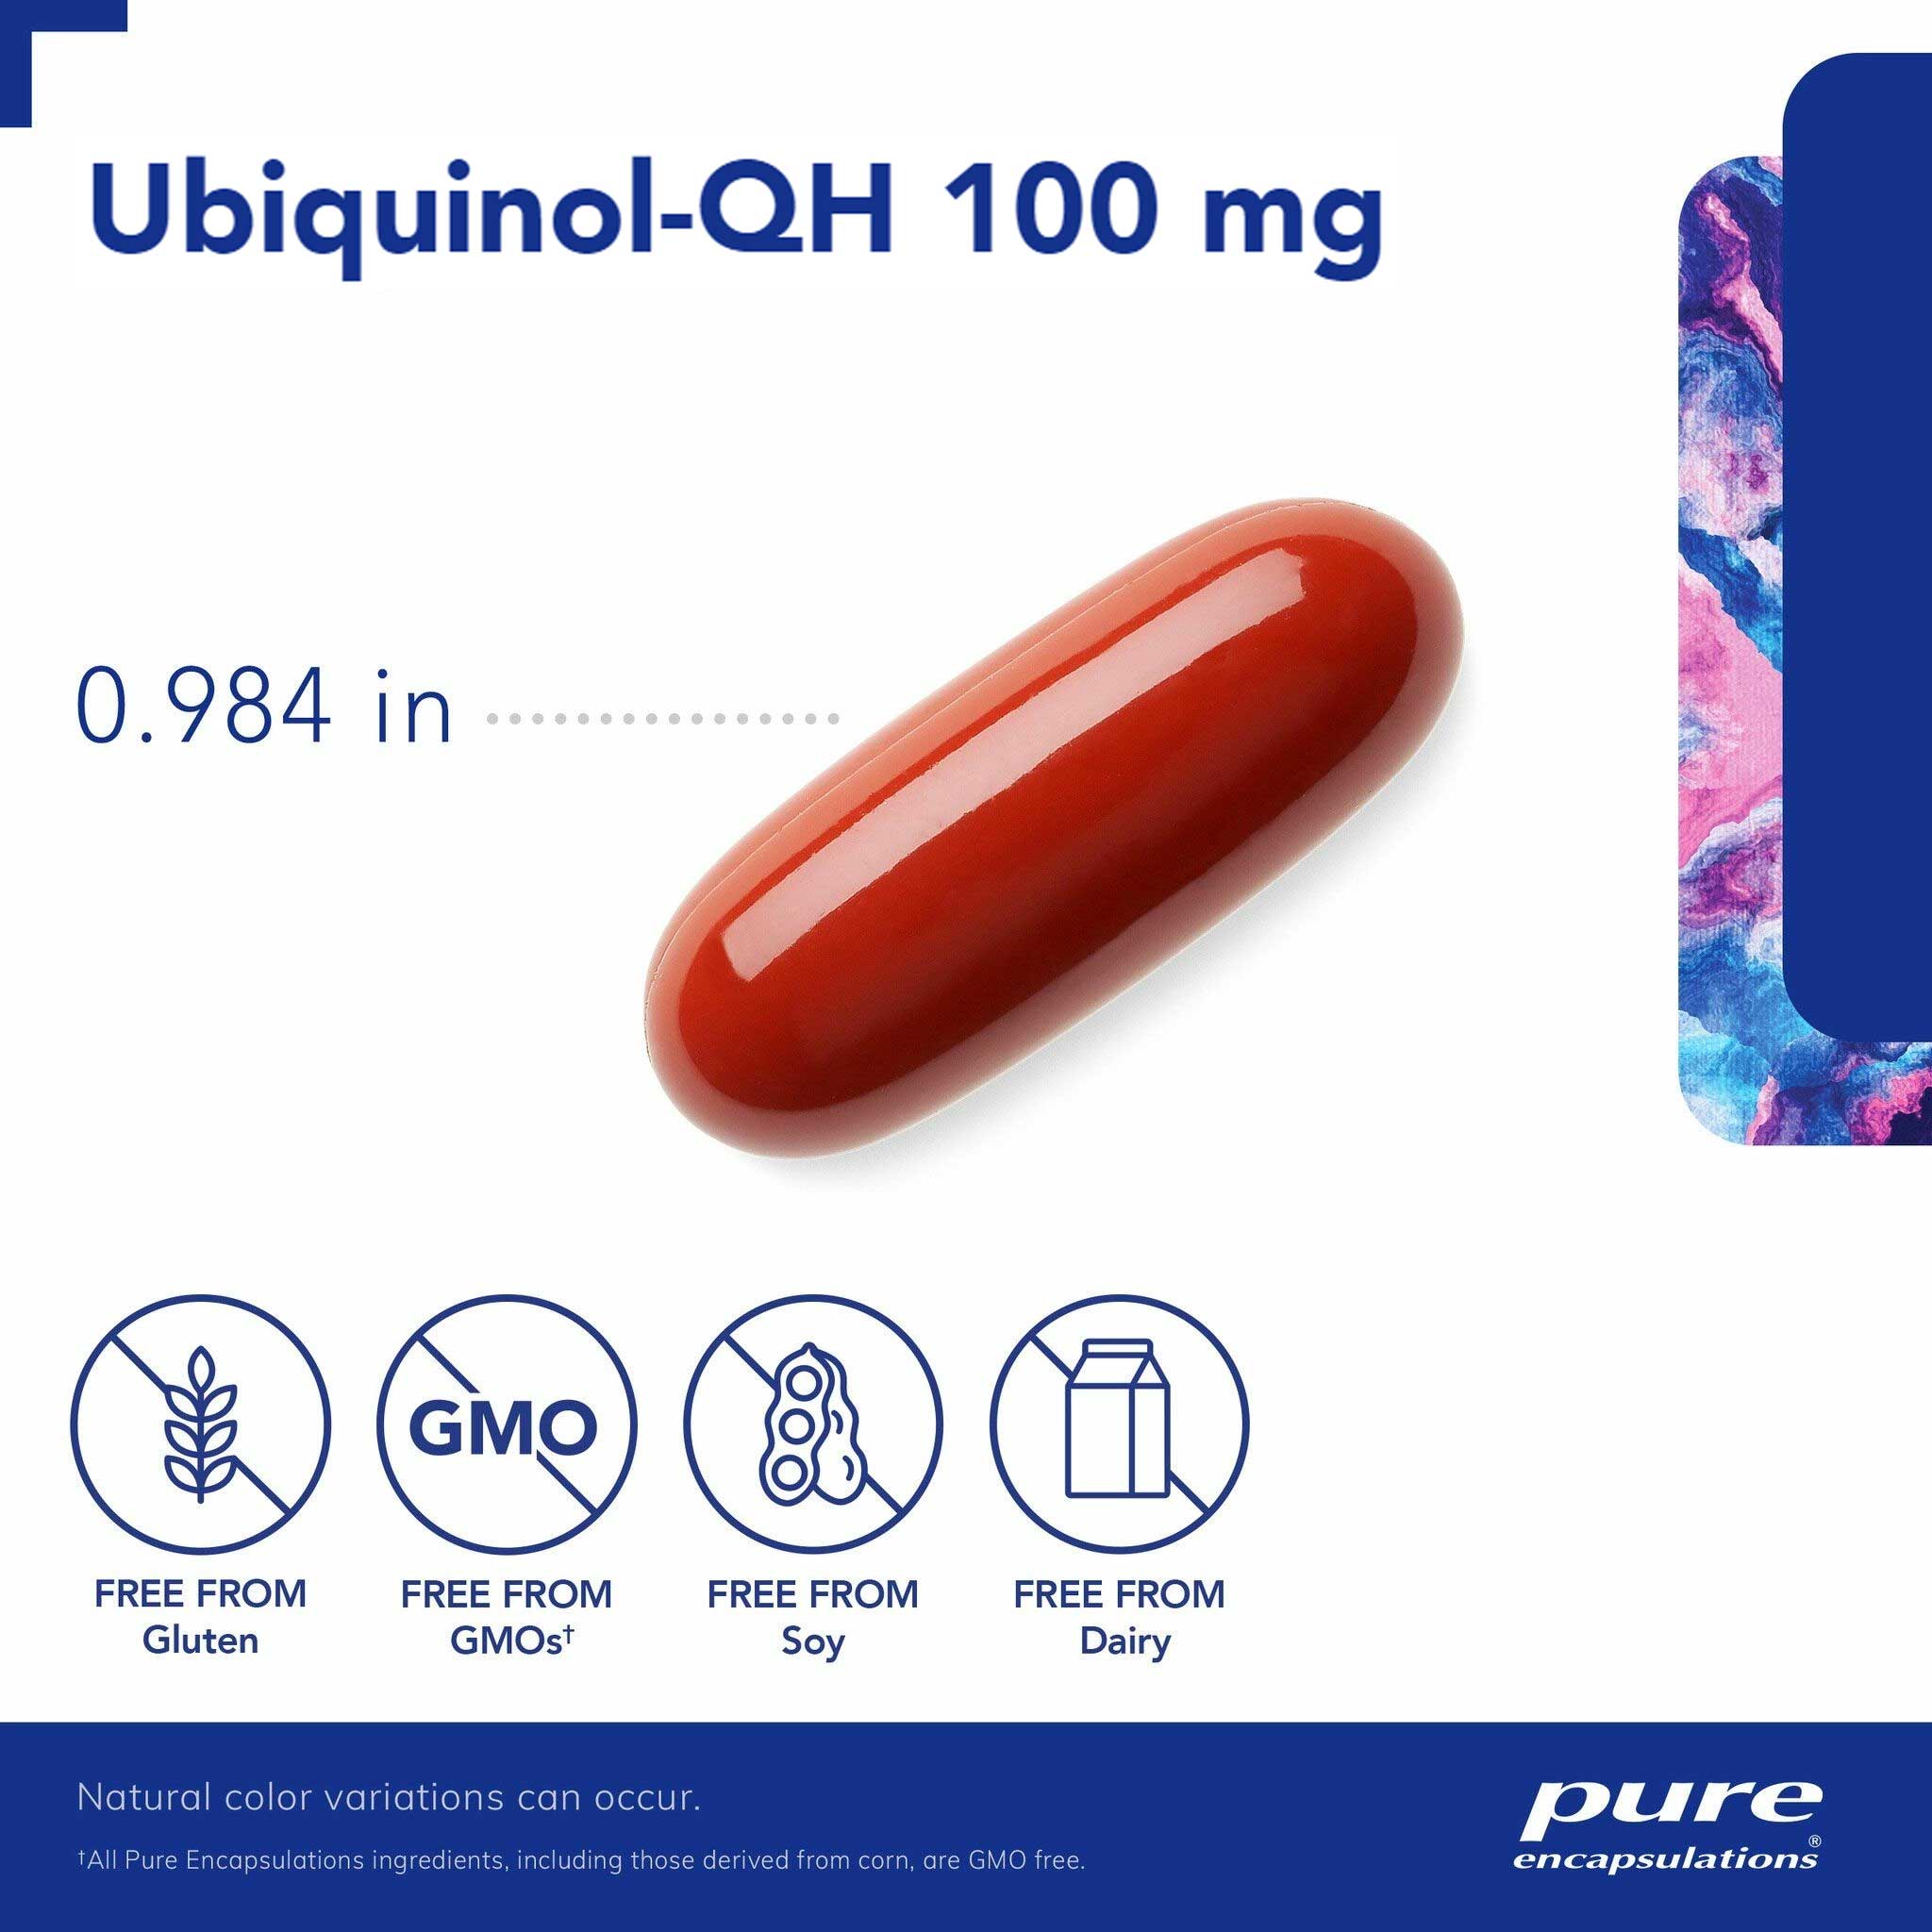 Pure Encapsulations Ubiquinol-QH 100mg Softgel Capsules